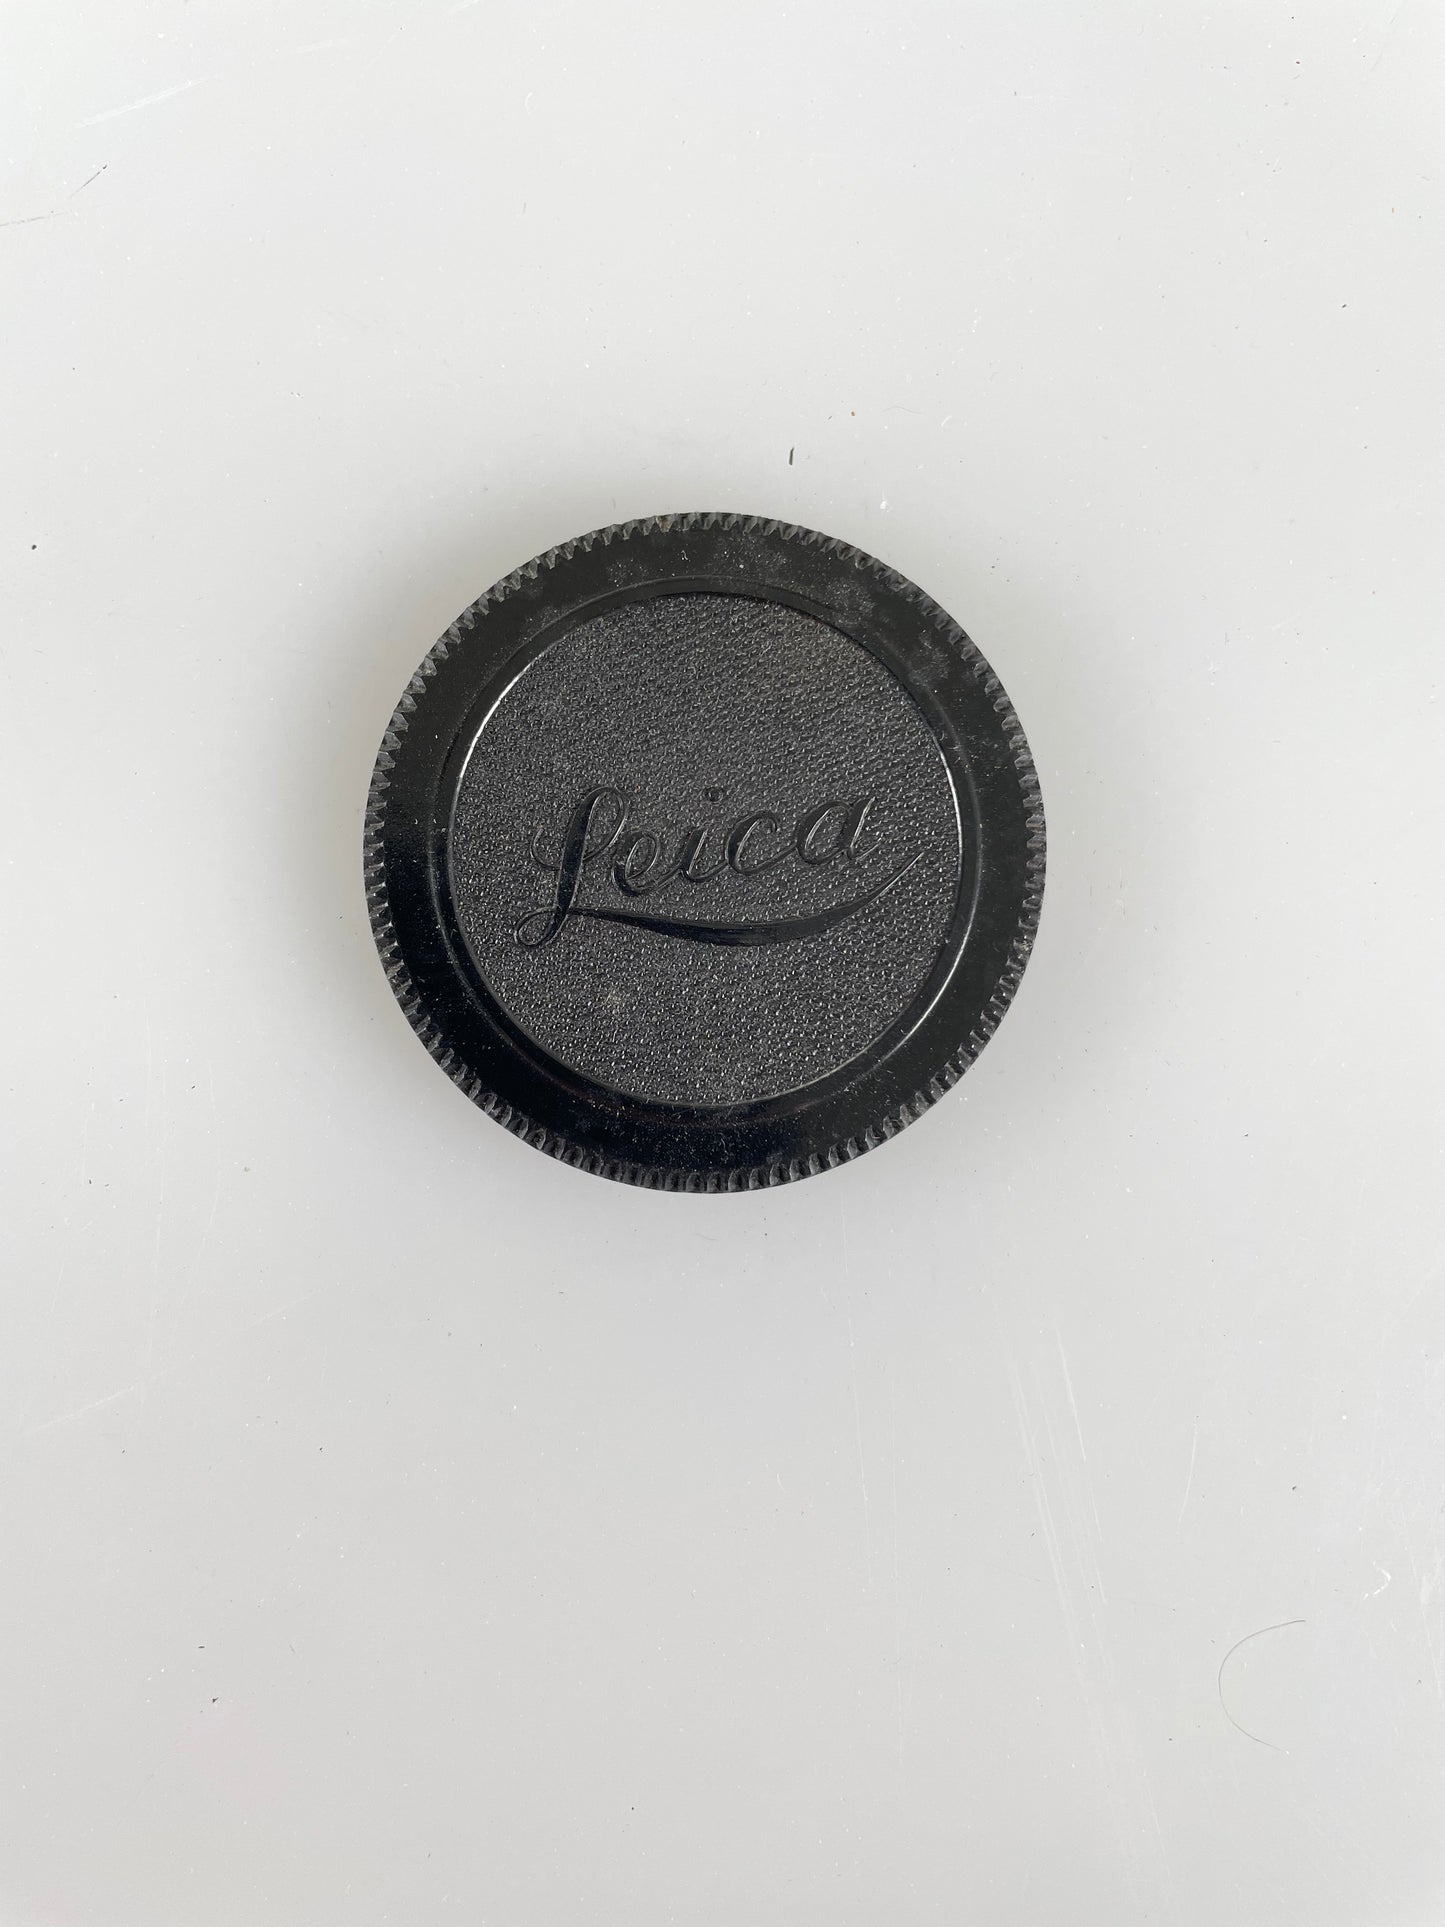 Leica bakelite body cap for Leica SM LTM body RARE